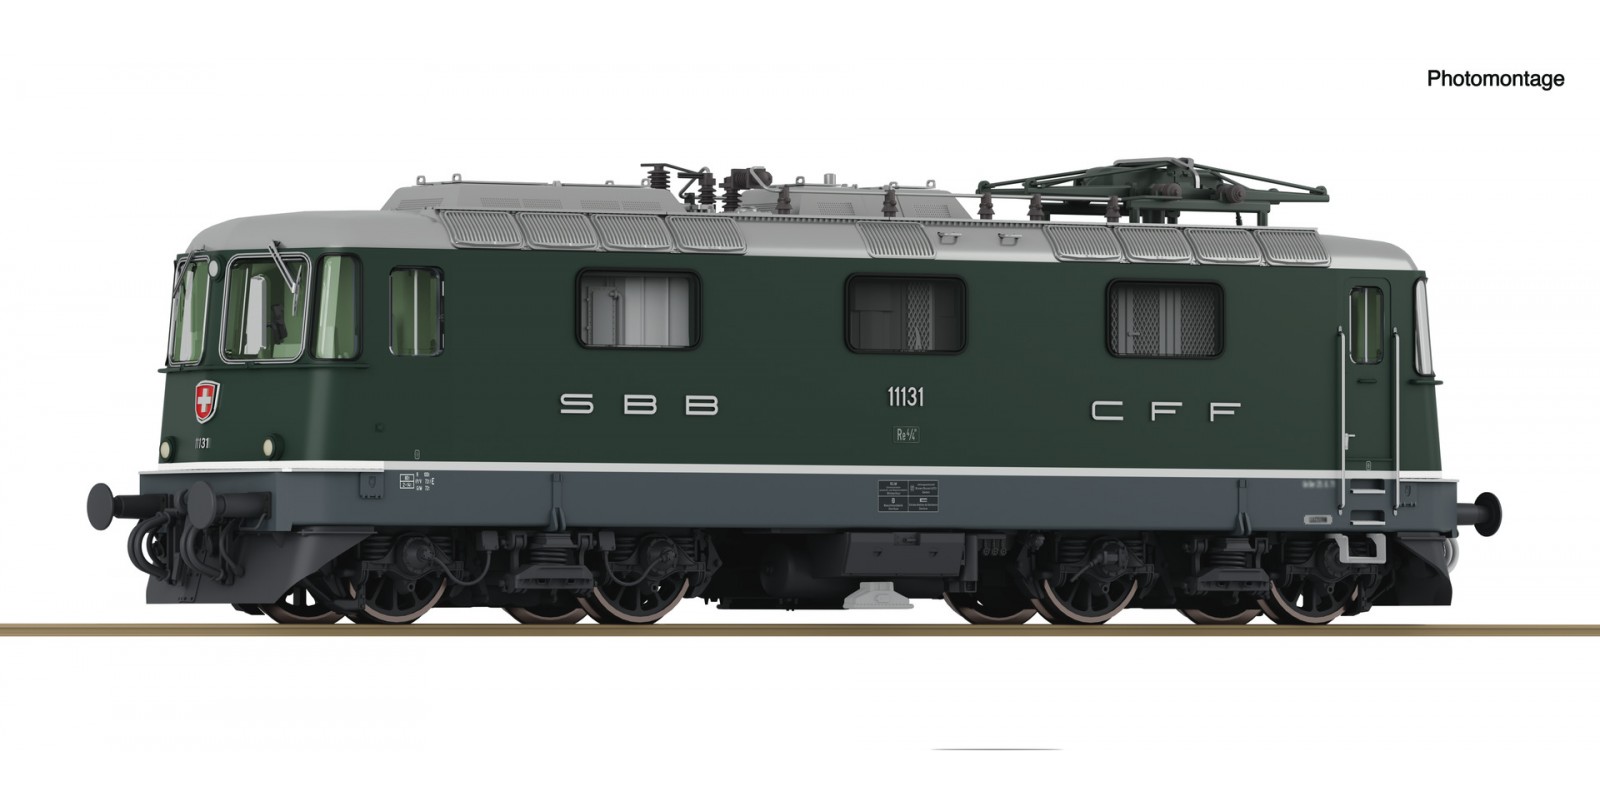 RO7510027 Electric locomotive Re 4/ 4 II 11131, SBB          